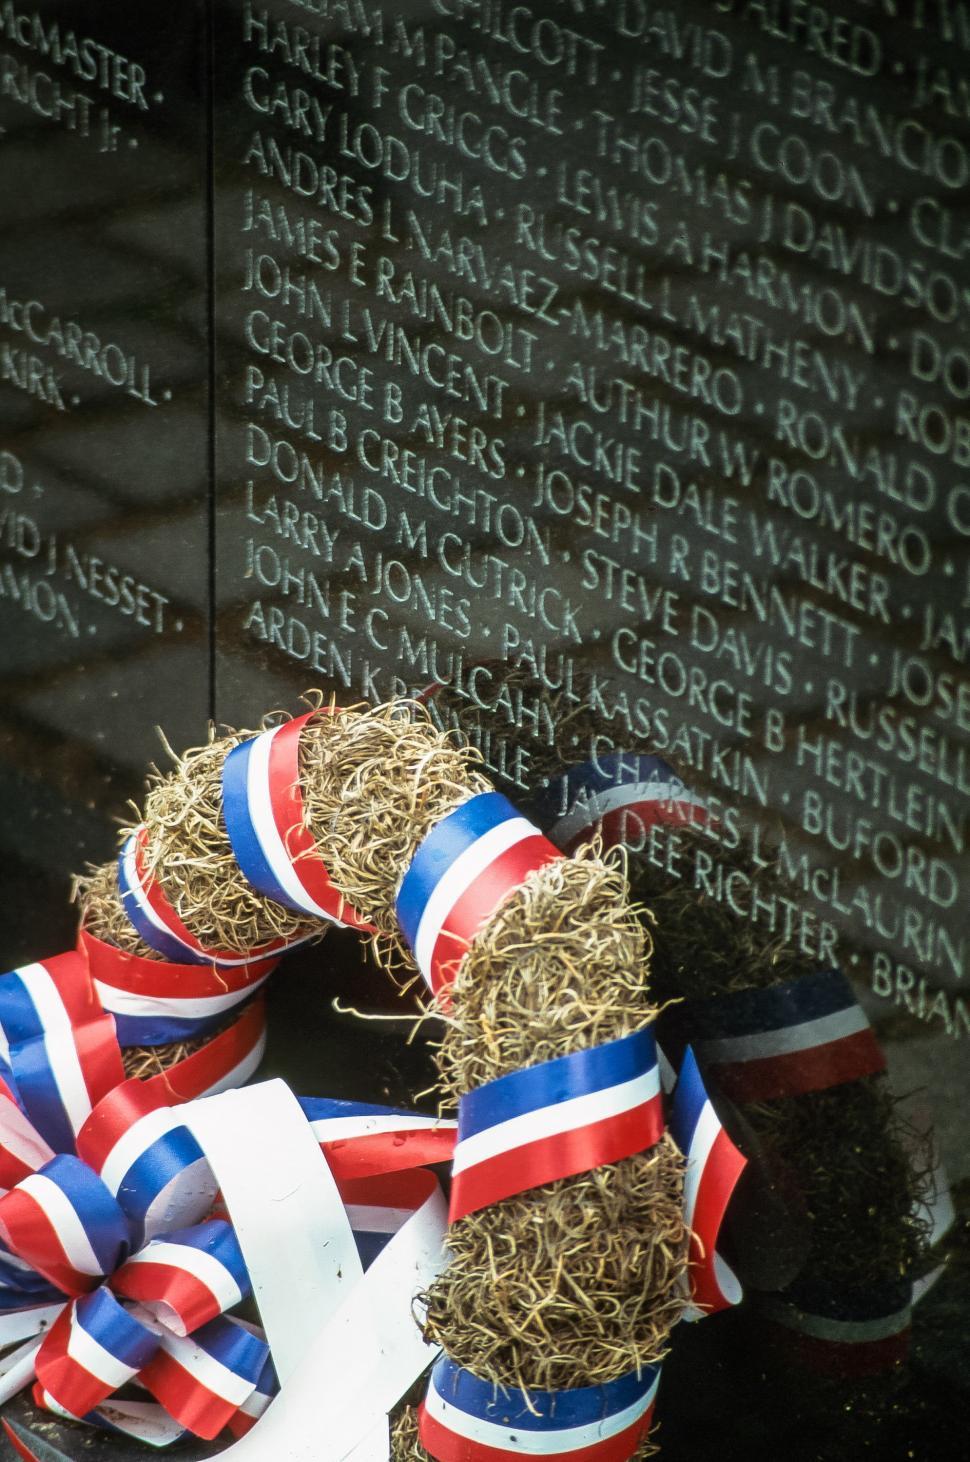 Free Image of Vietnam Memorial 